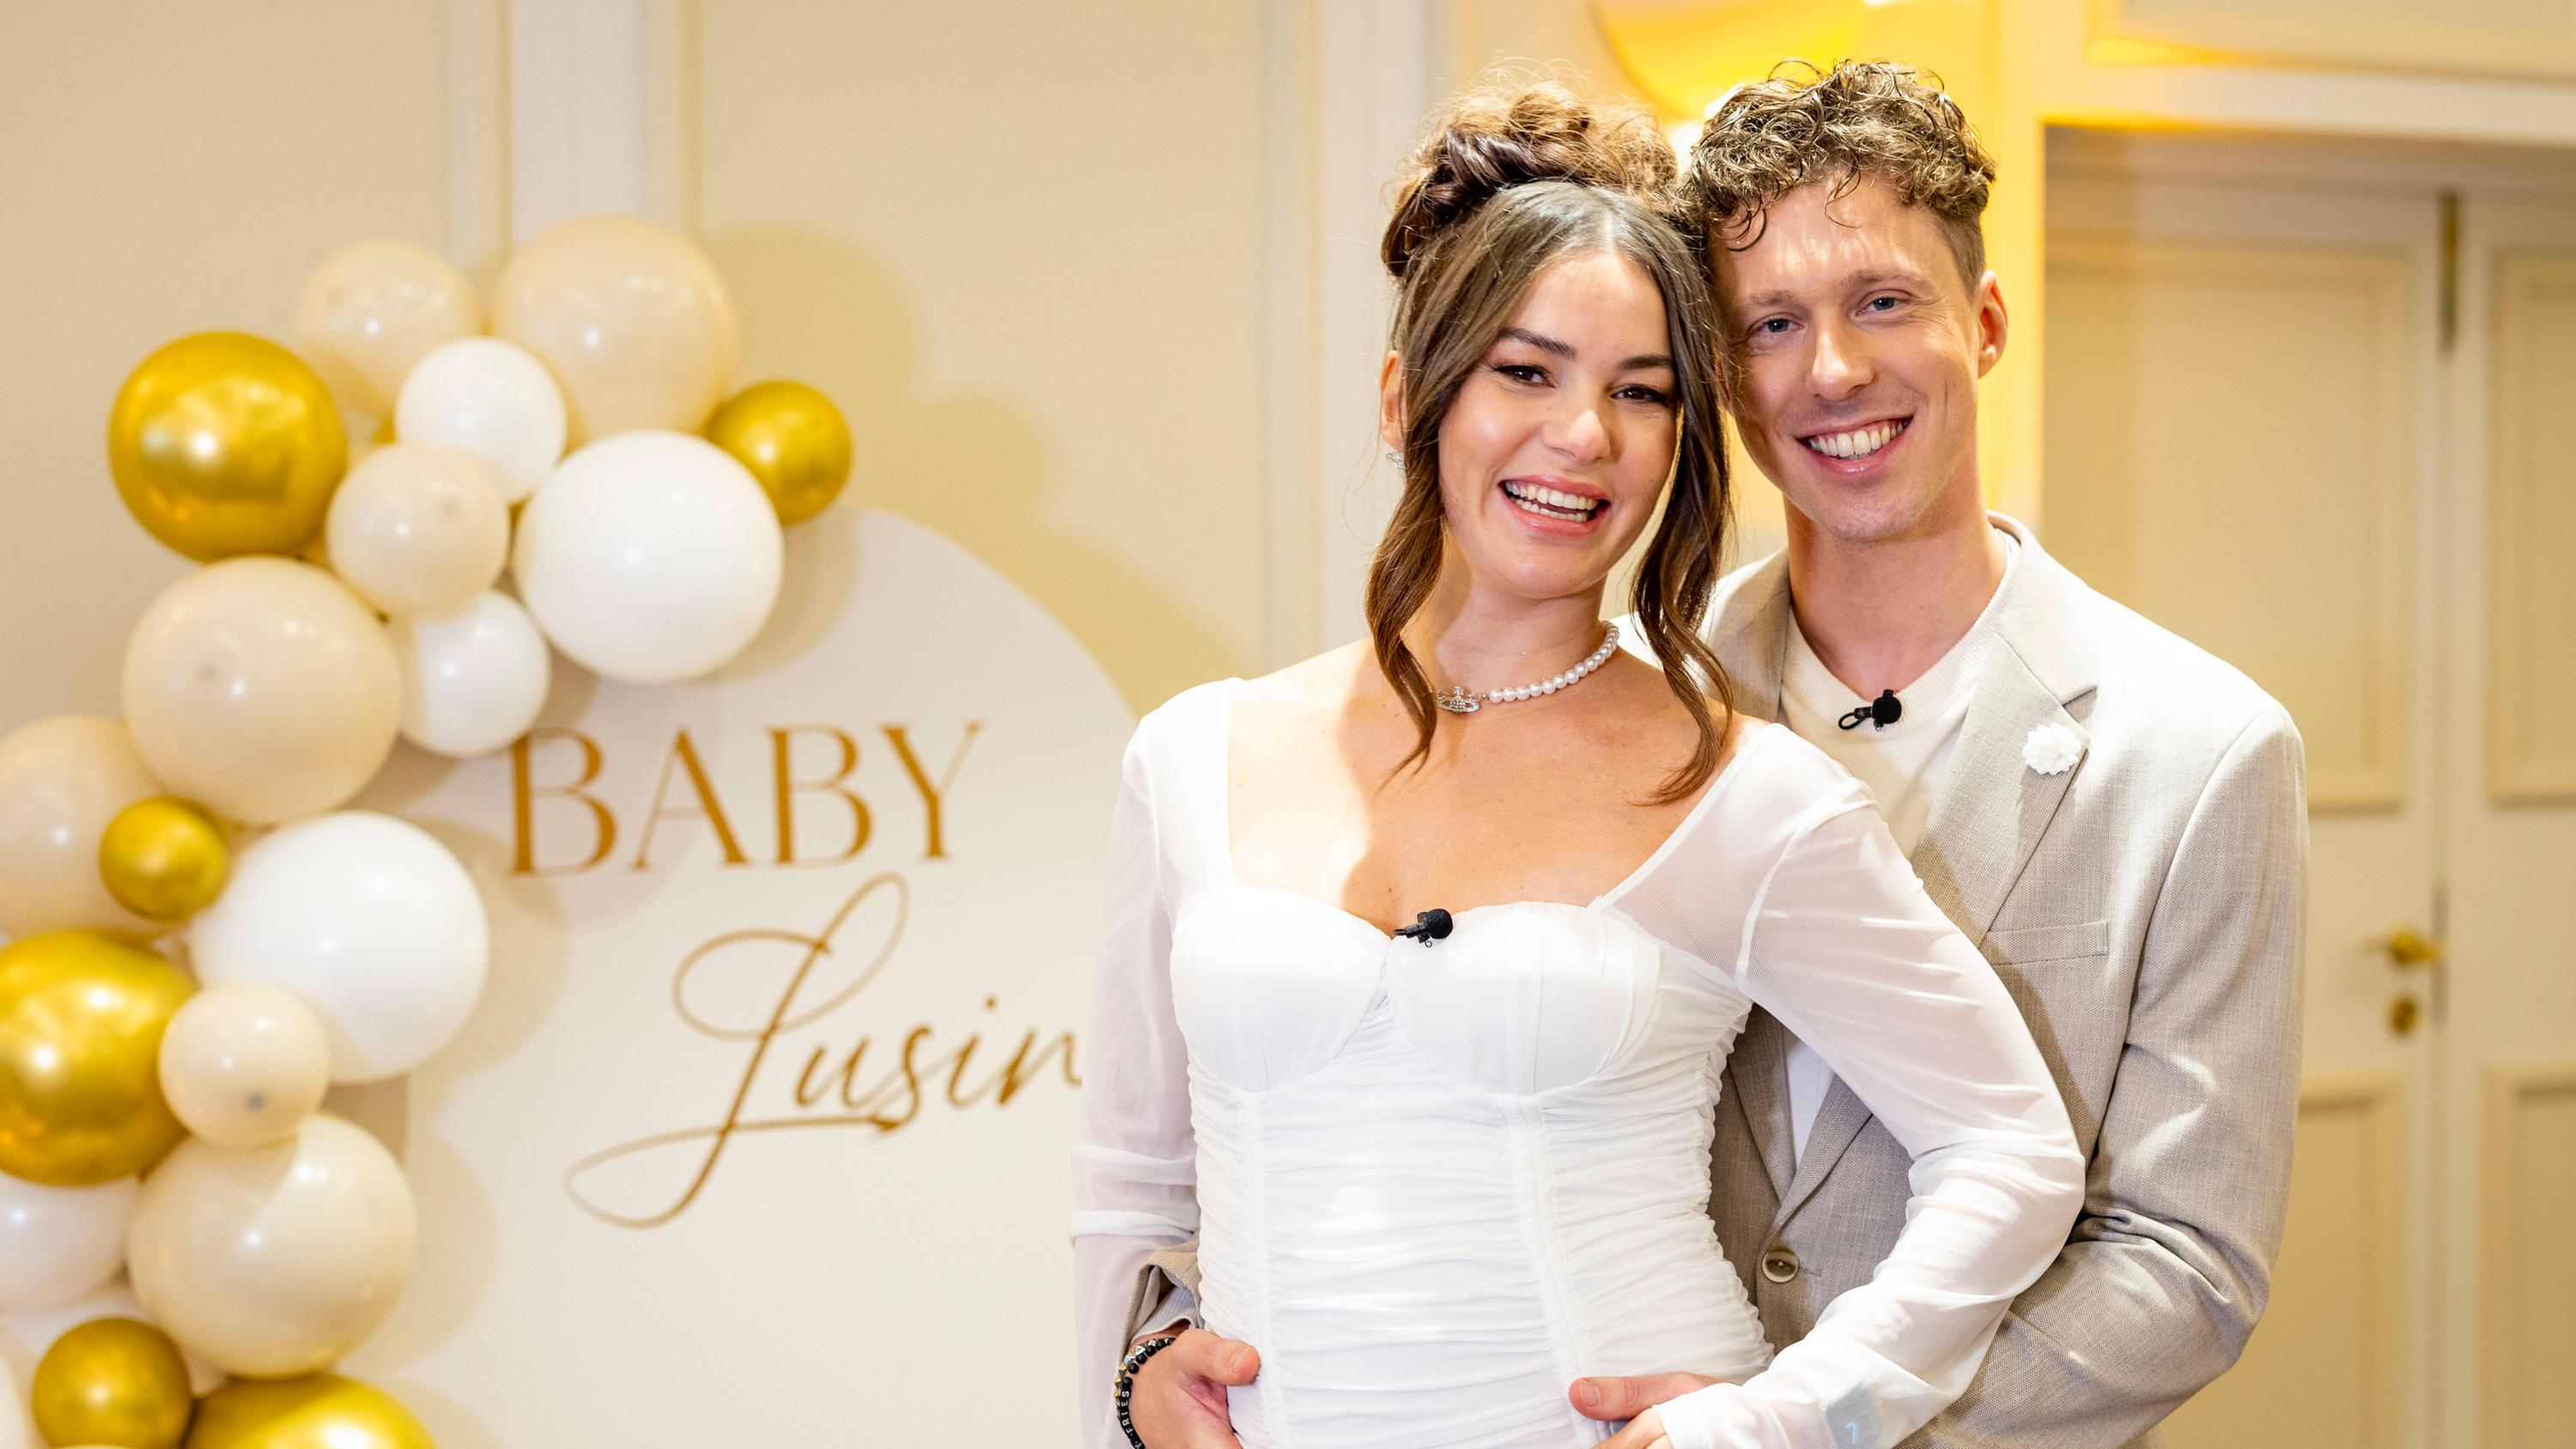 Renata & Valentin Lusin: Let's Dance-Stars enthüllen Baby-Geschlecht